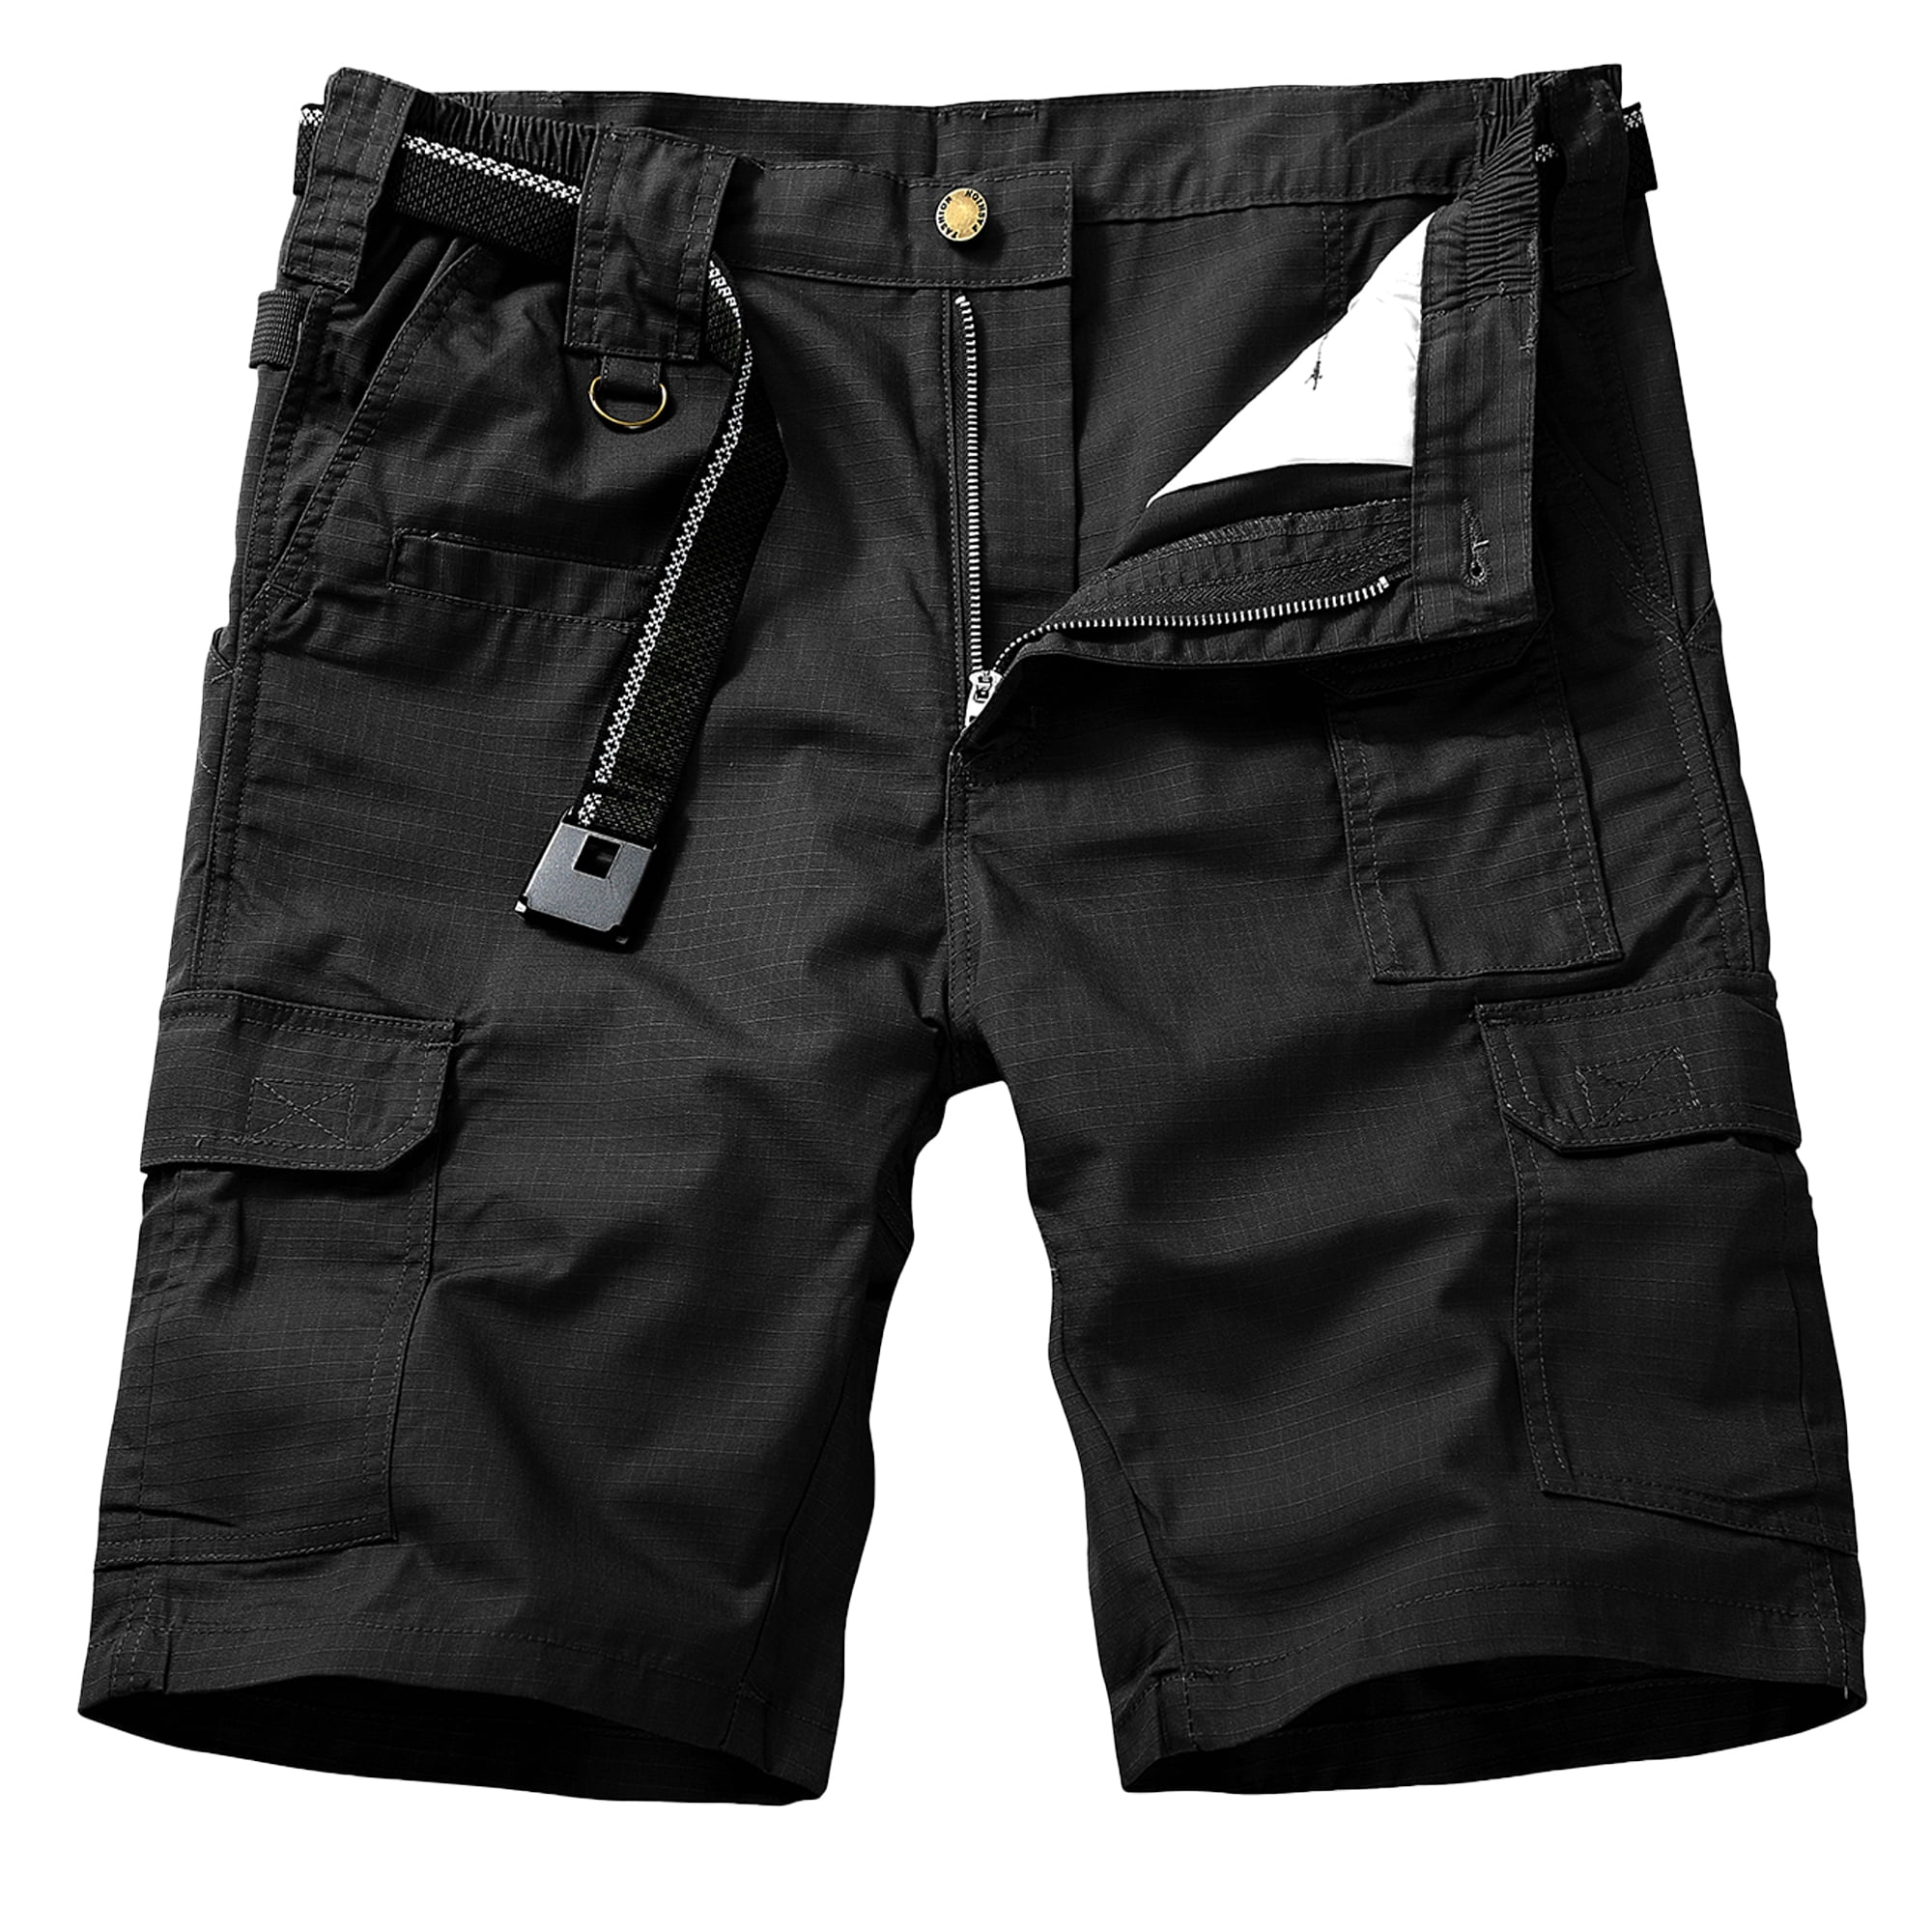 WUAI-Men Outdoors Cargo Shorts Casual Drawstring Elastic Waist Workout Shorts Multi-Pocket Stretchy Twill Summer Shorts 